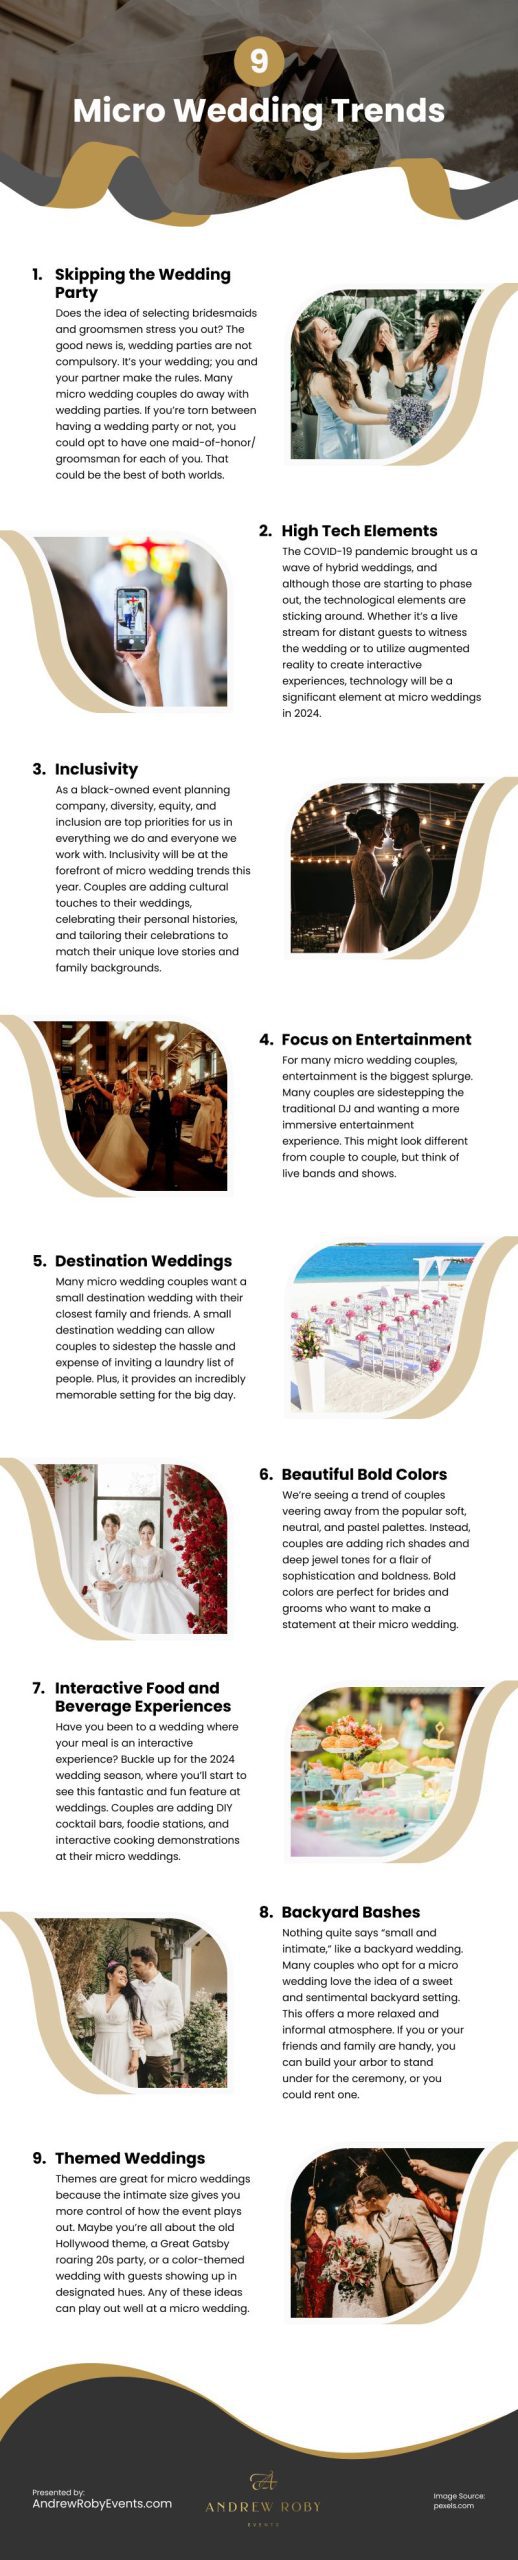 9 Micro Wedding Trends Infographic